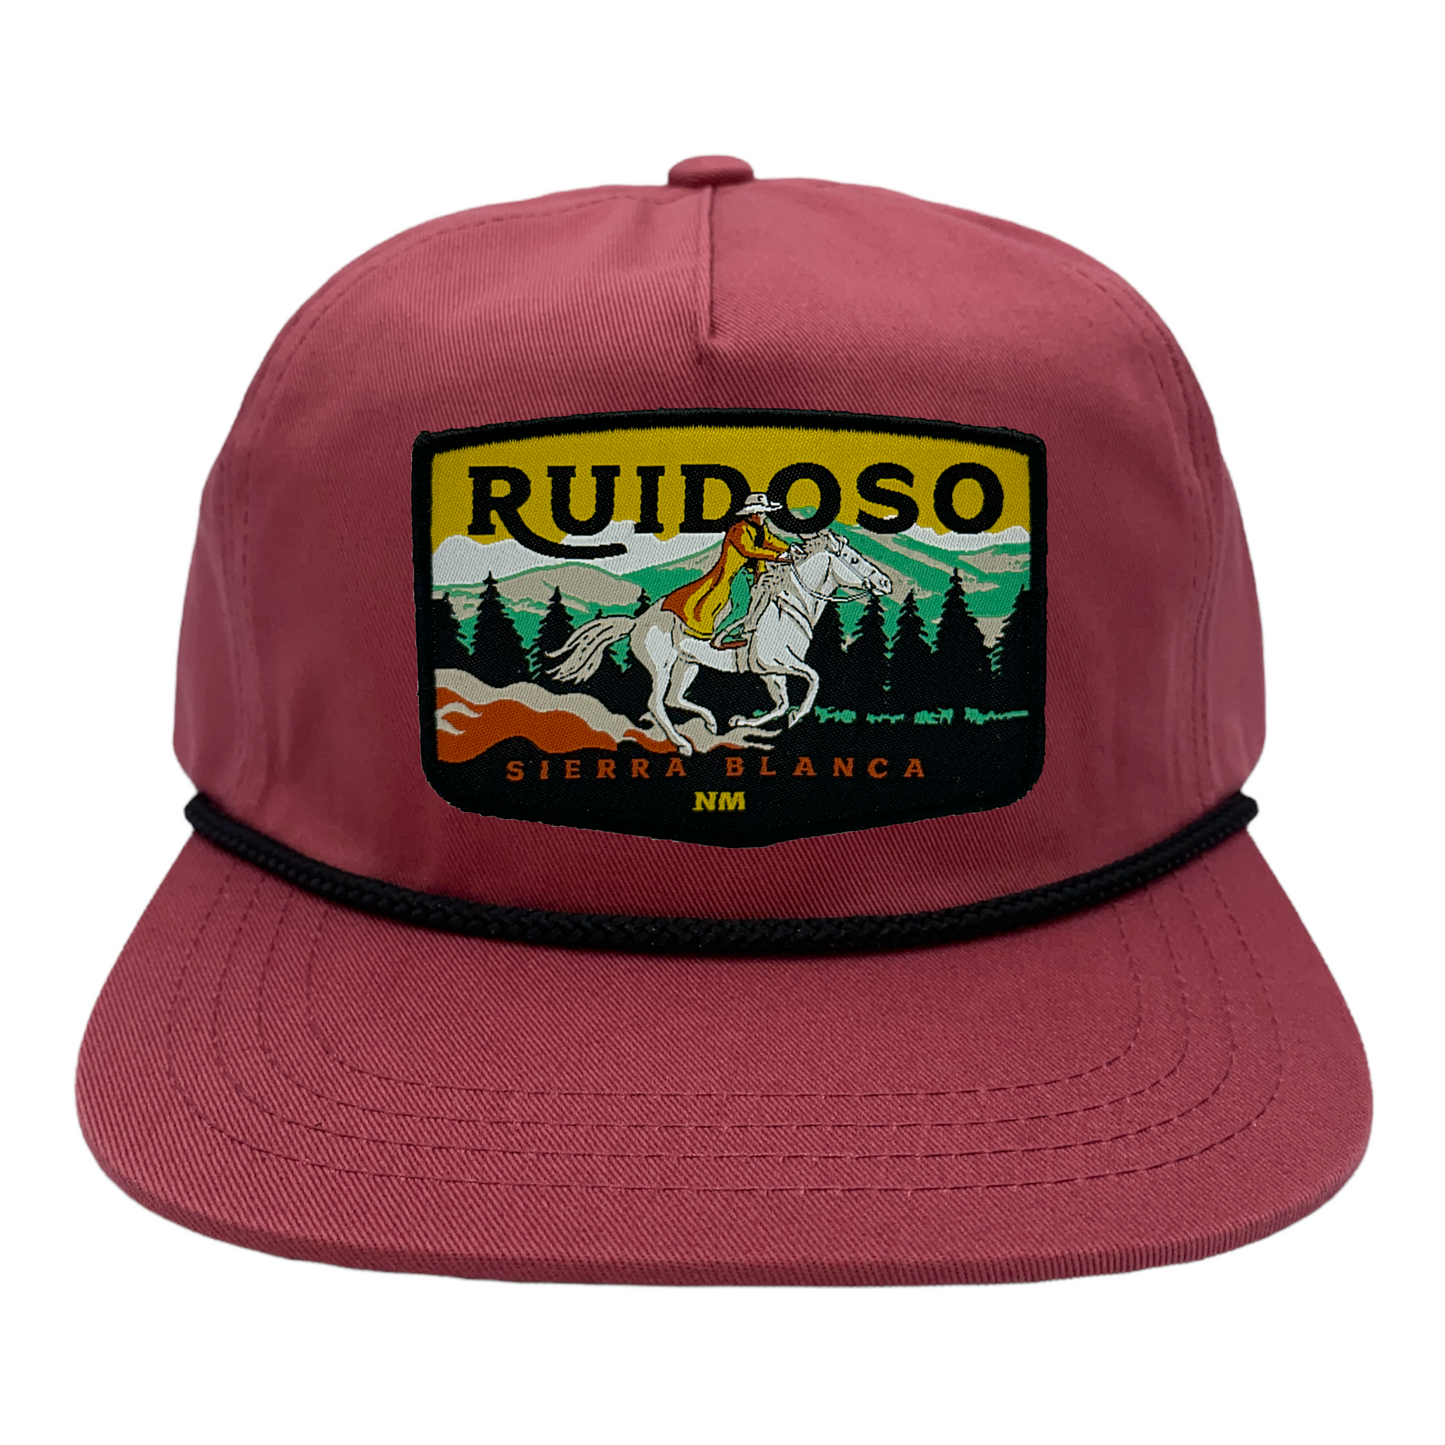 Ruidoso, NM Snapback - Rider Edition